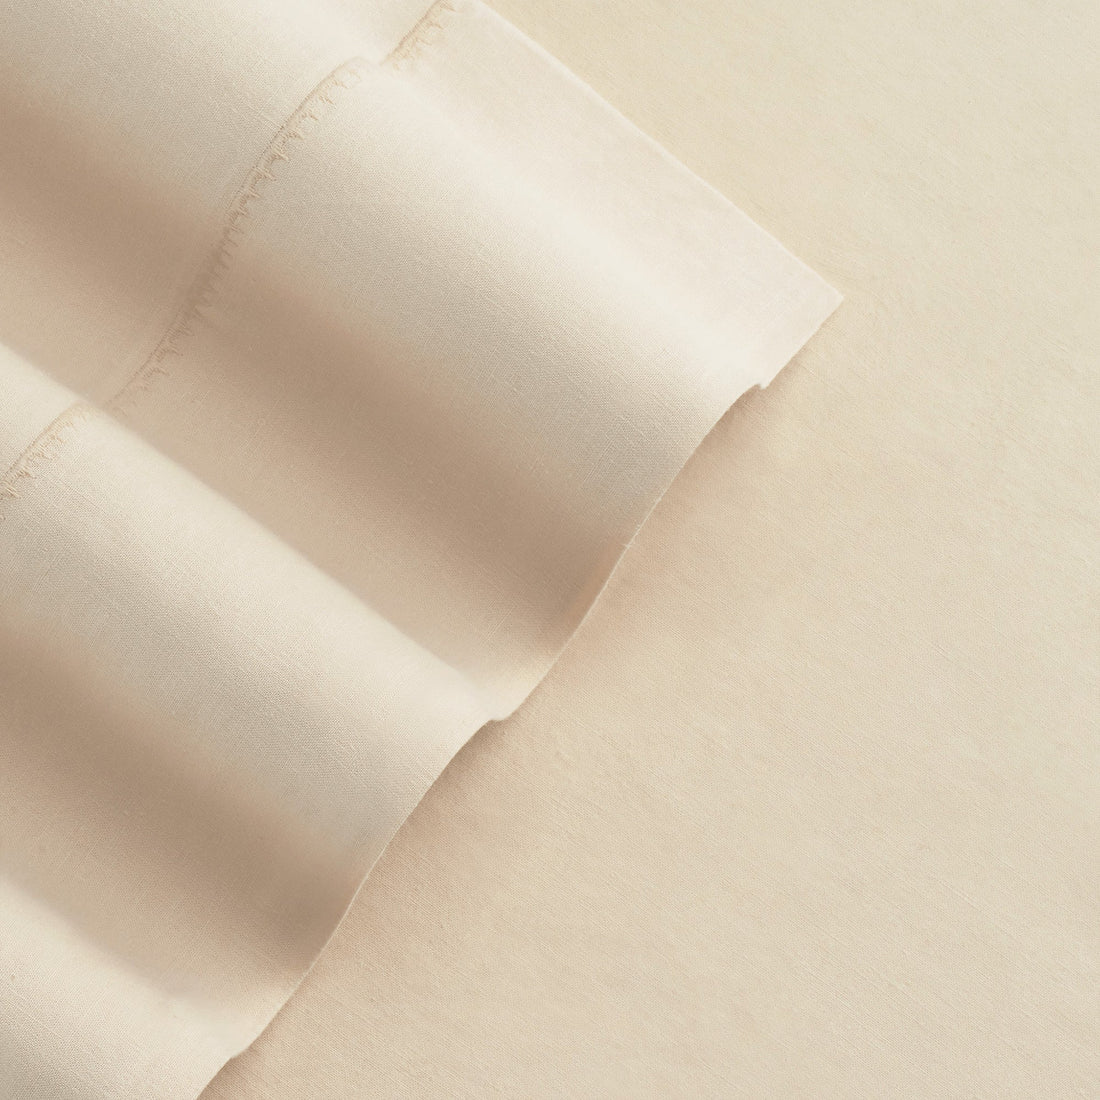 Linen and Eucalyptus Sheet Sets